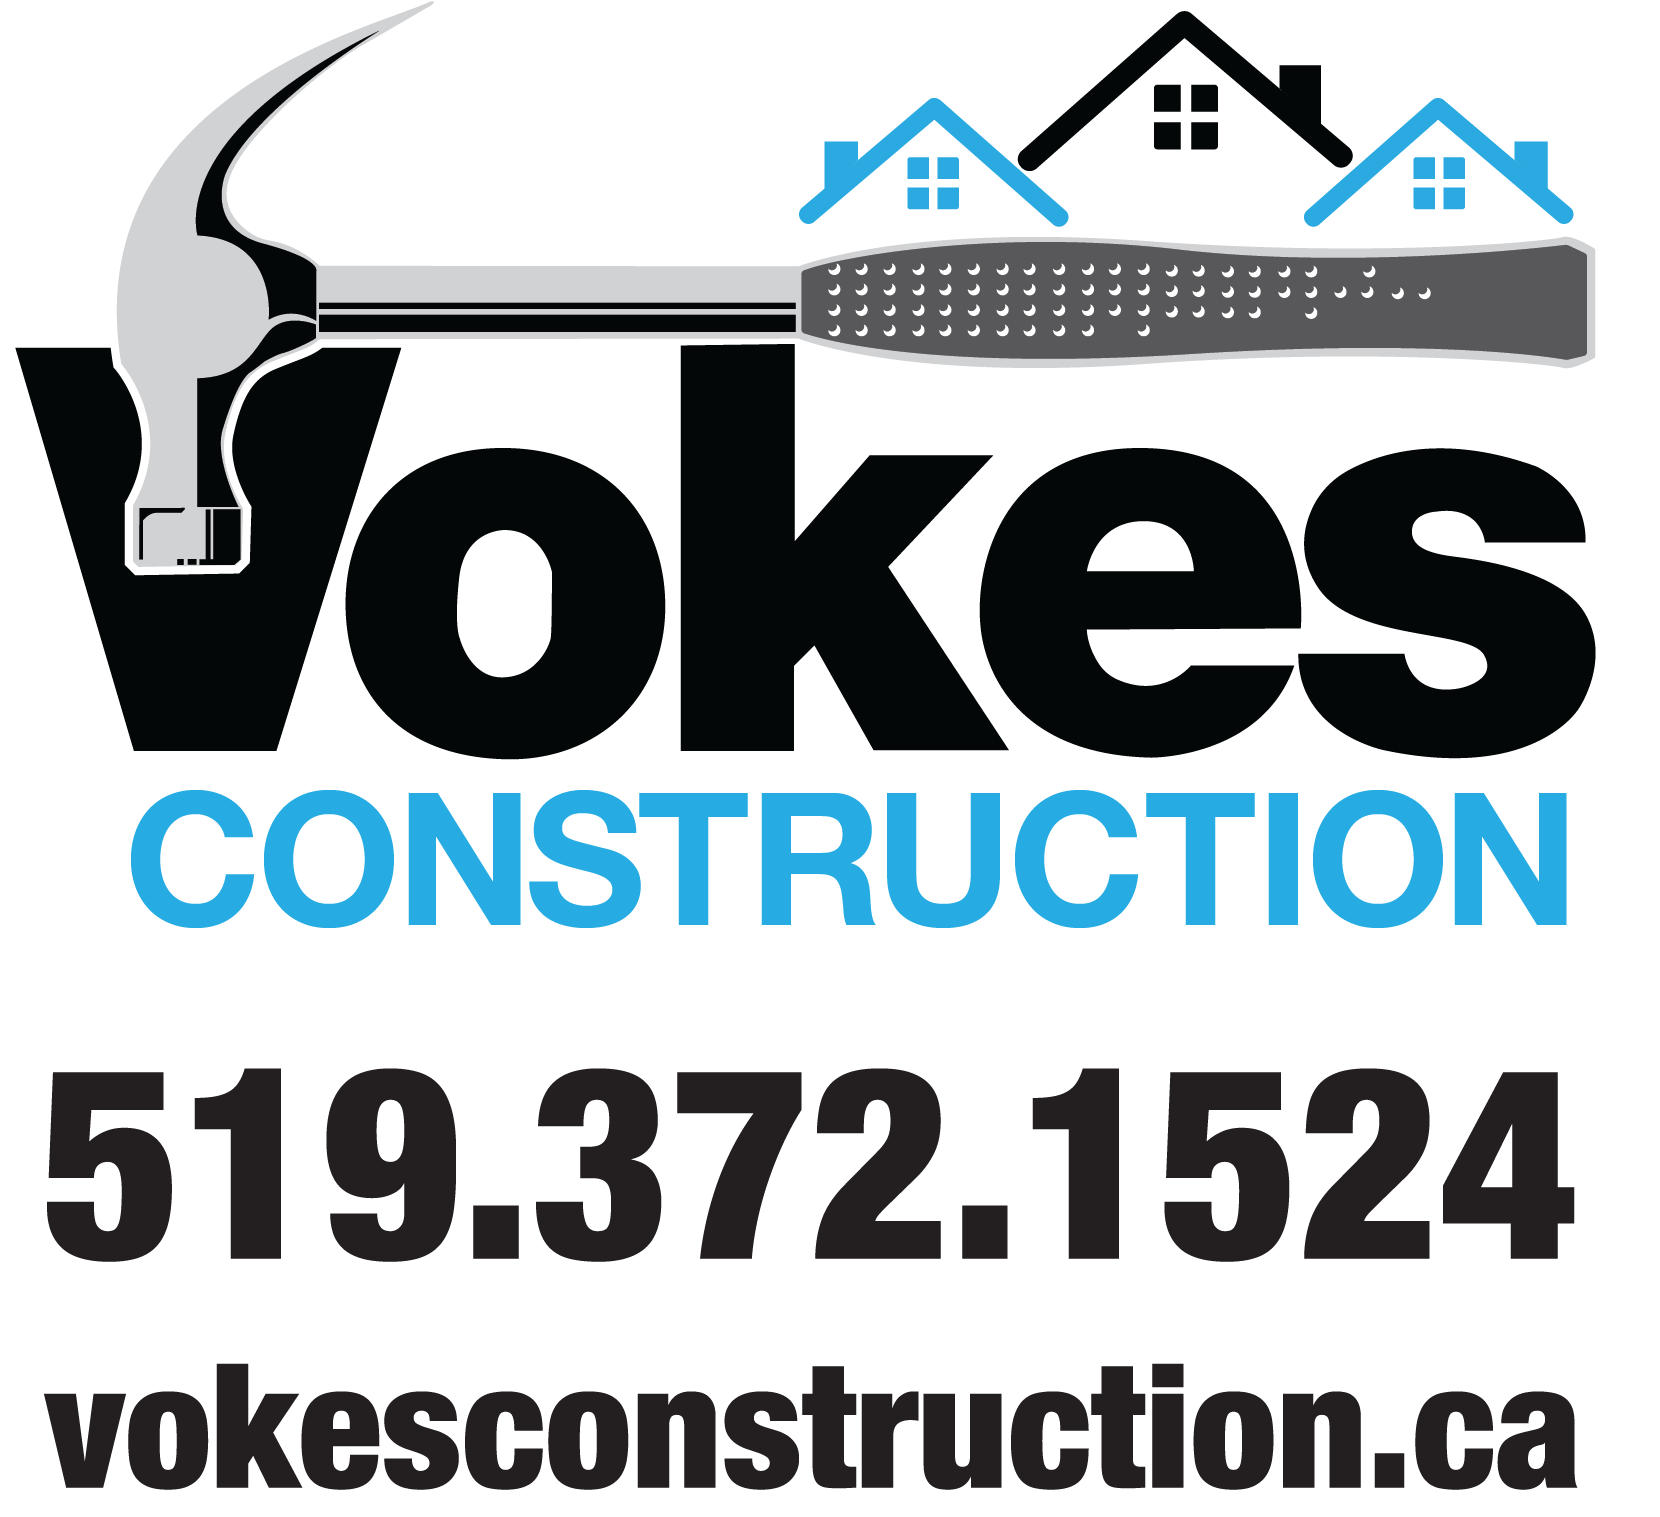 Vokes Construction